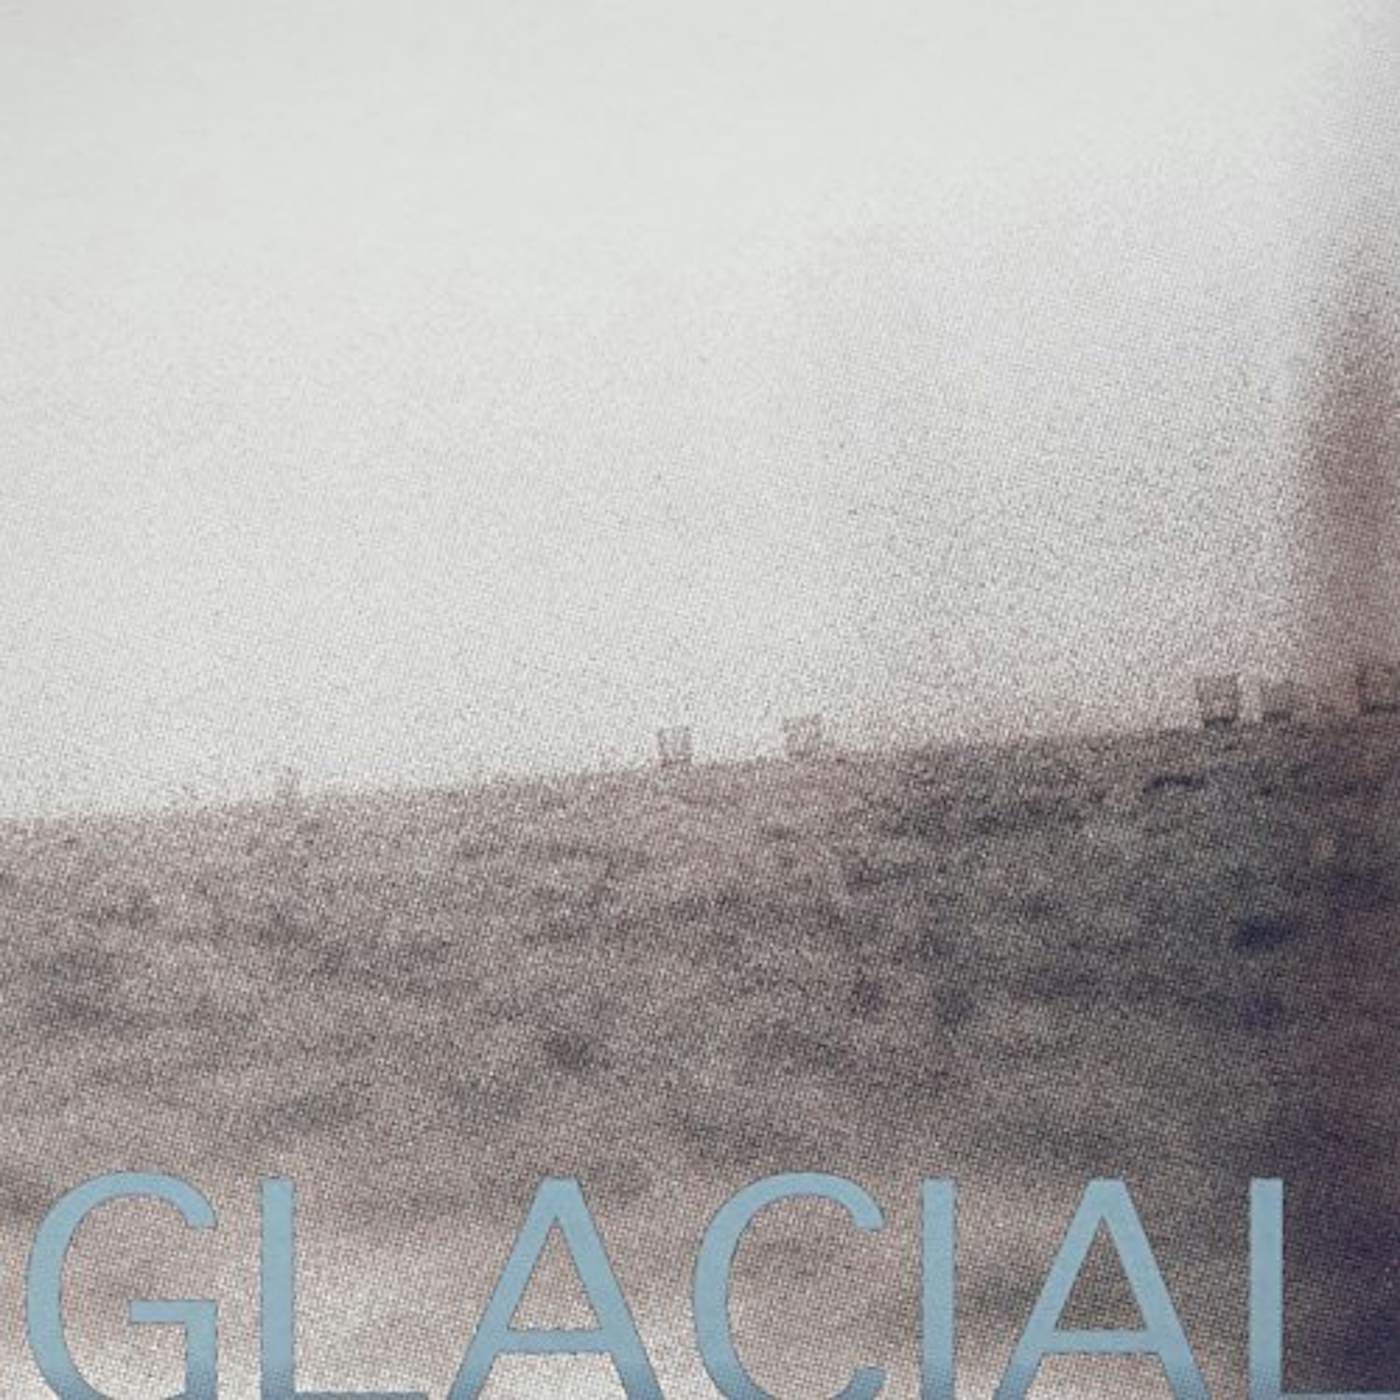 Glacial On Jones Beach Vinyl Record